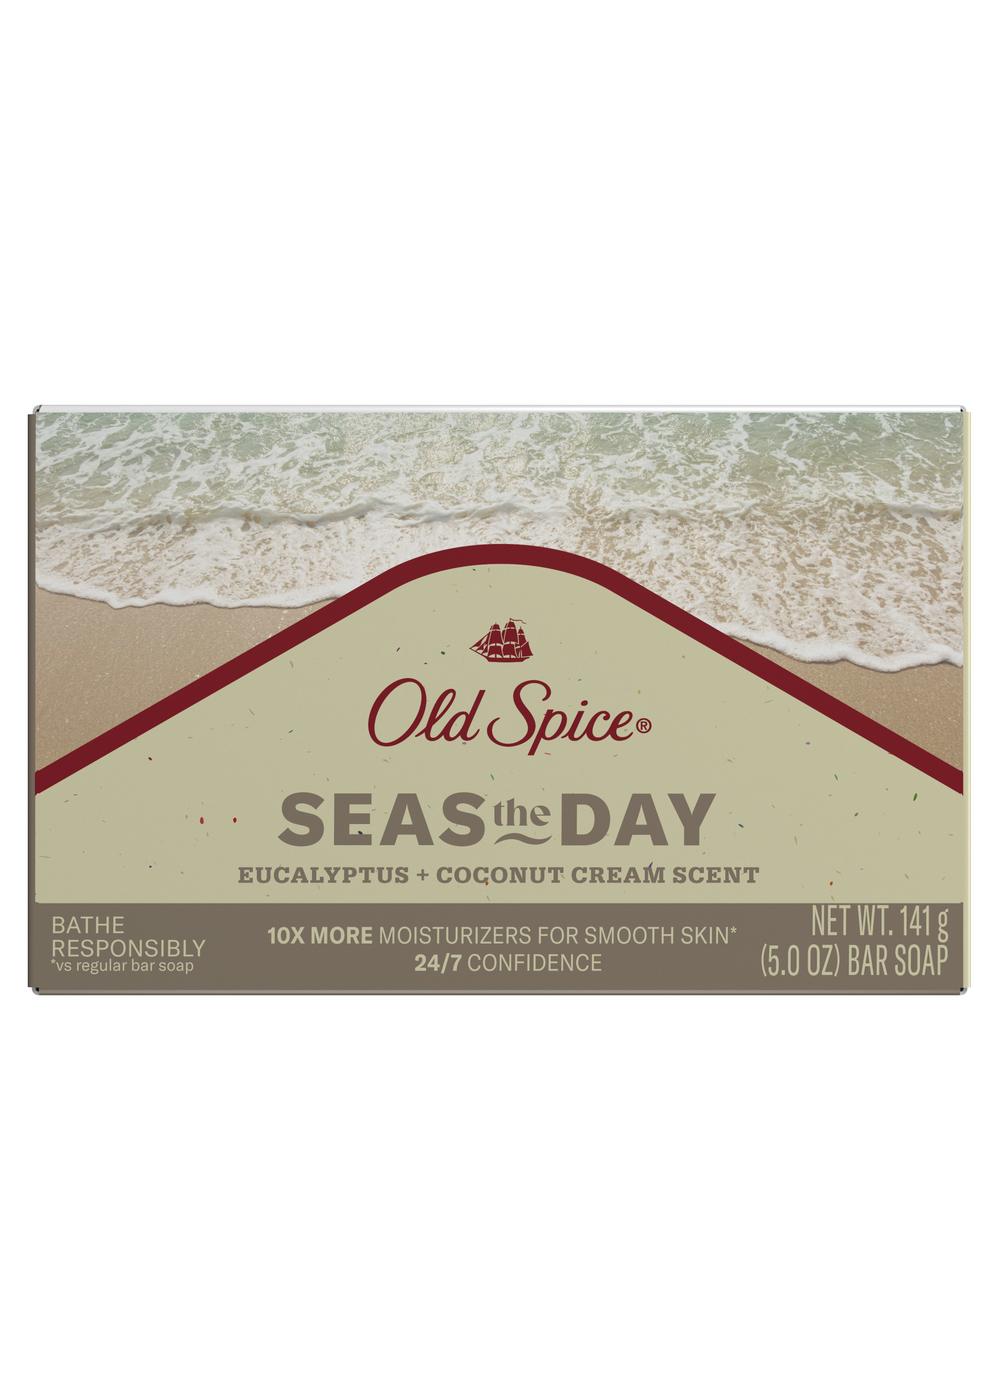 Old Spice Seas The Day Bar Soap - Eucalyptus & Coconut Cream; image 1 of 2